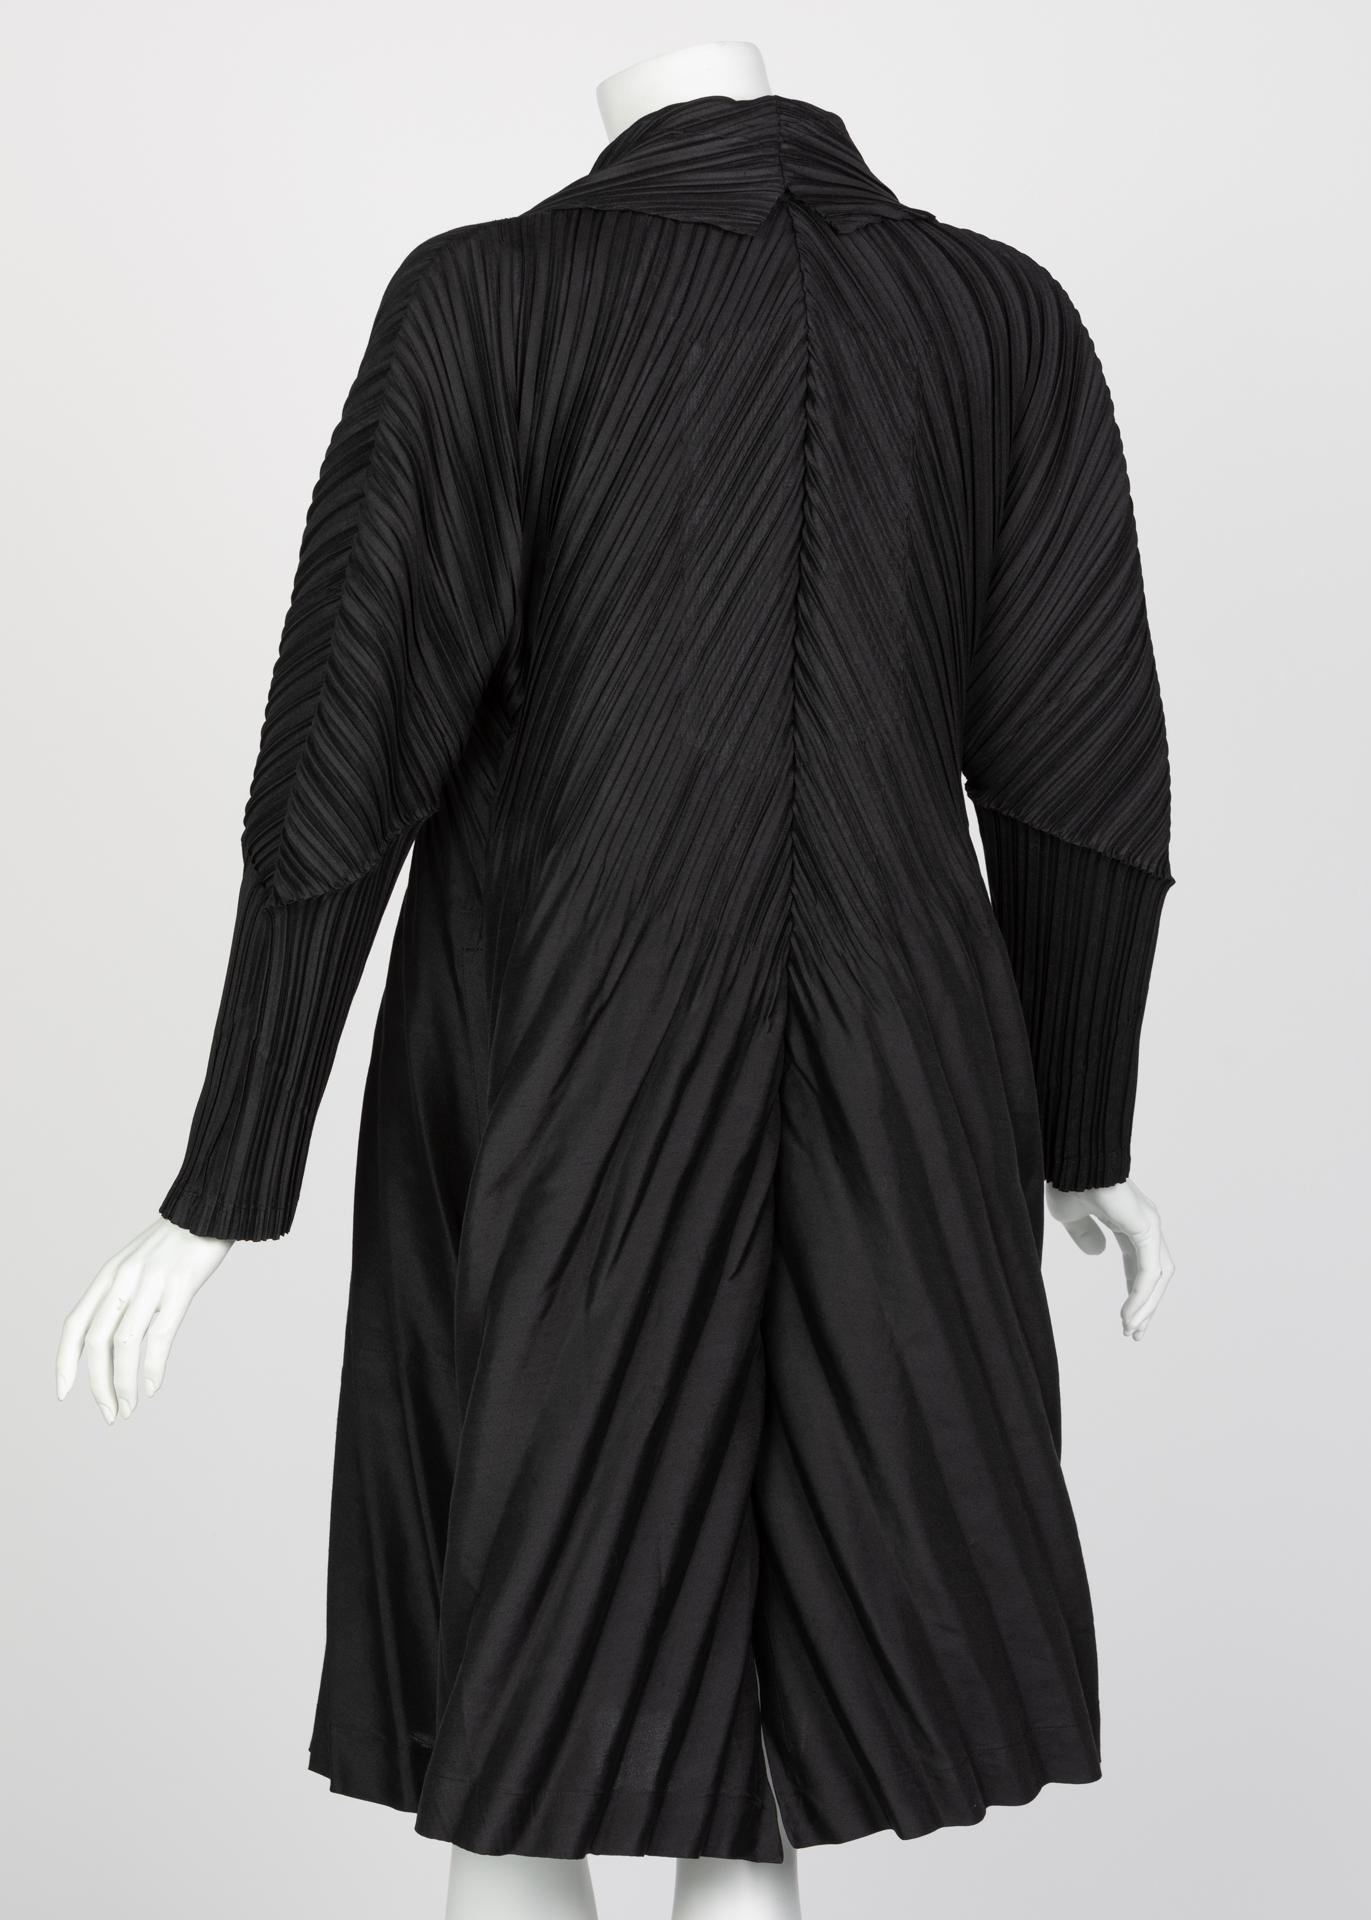 Issey Miyake Vintage Black Sculptural Pleated Cocoon Coat For Sale 1